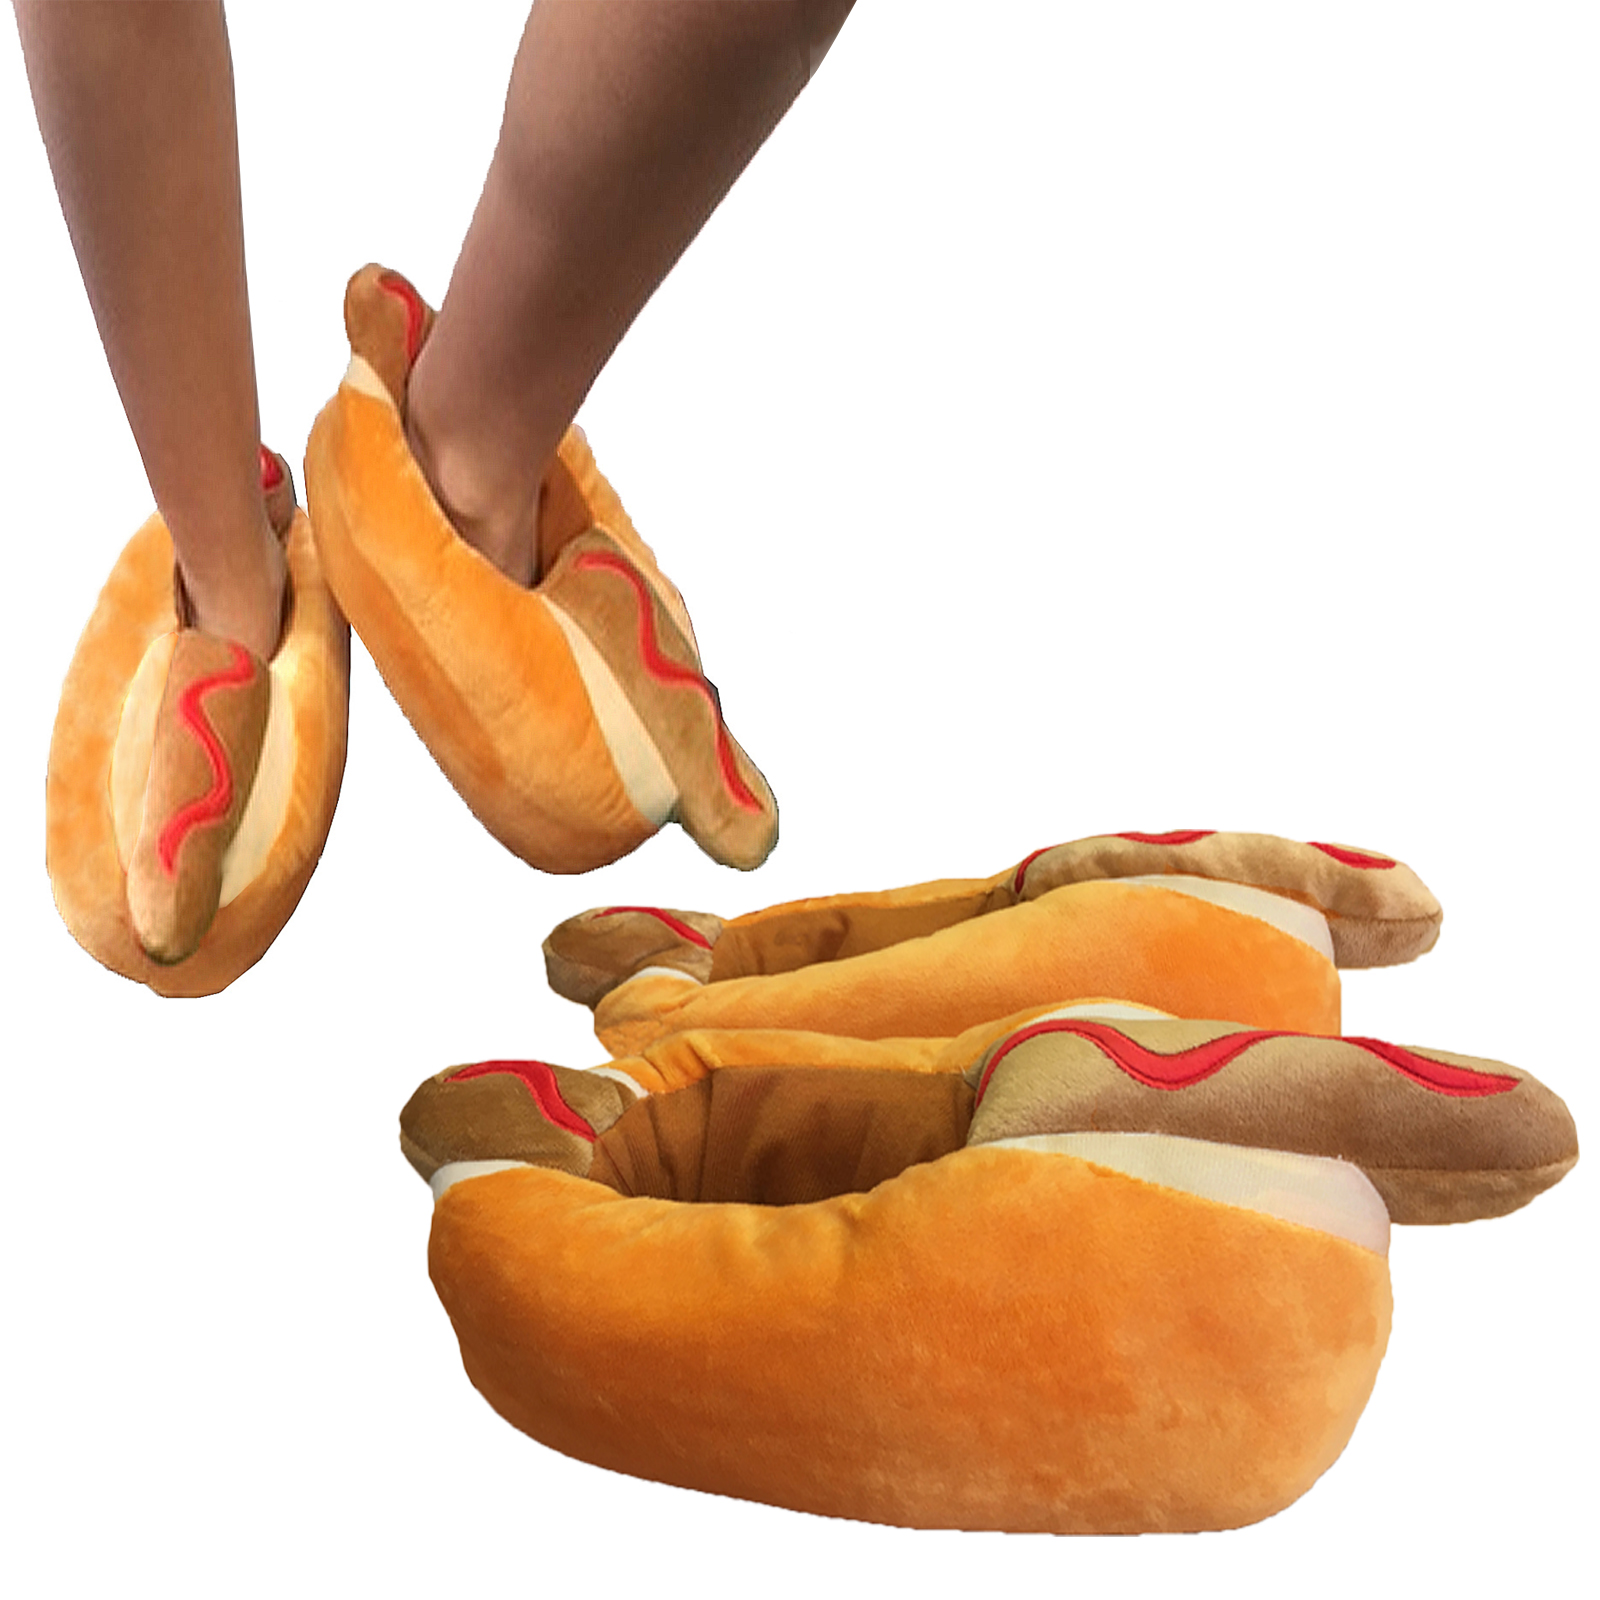 Adults 3D Hot Dog Novelty Sausage 